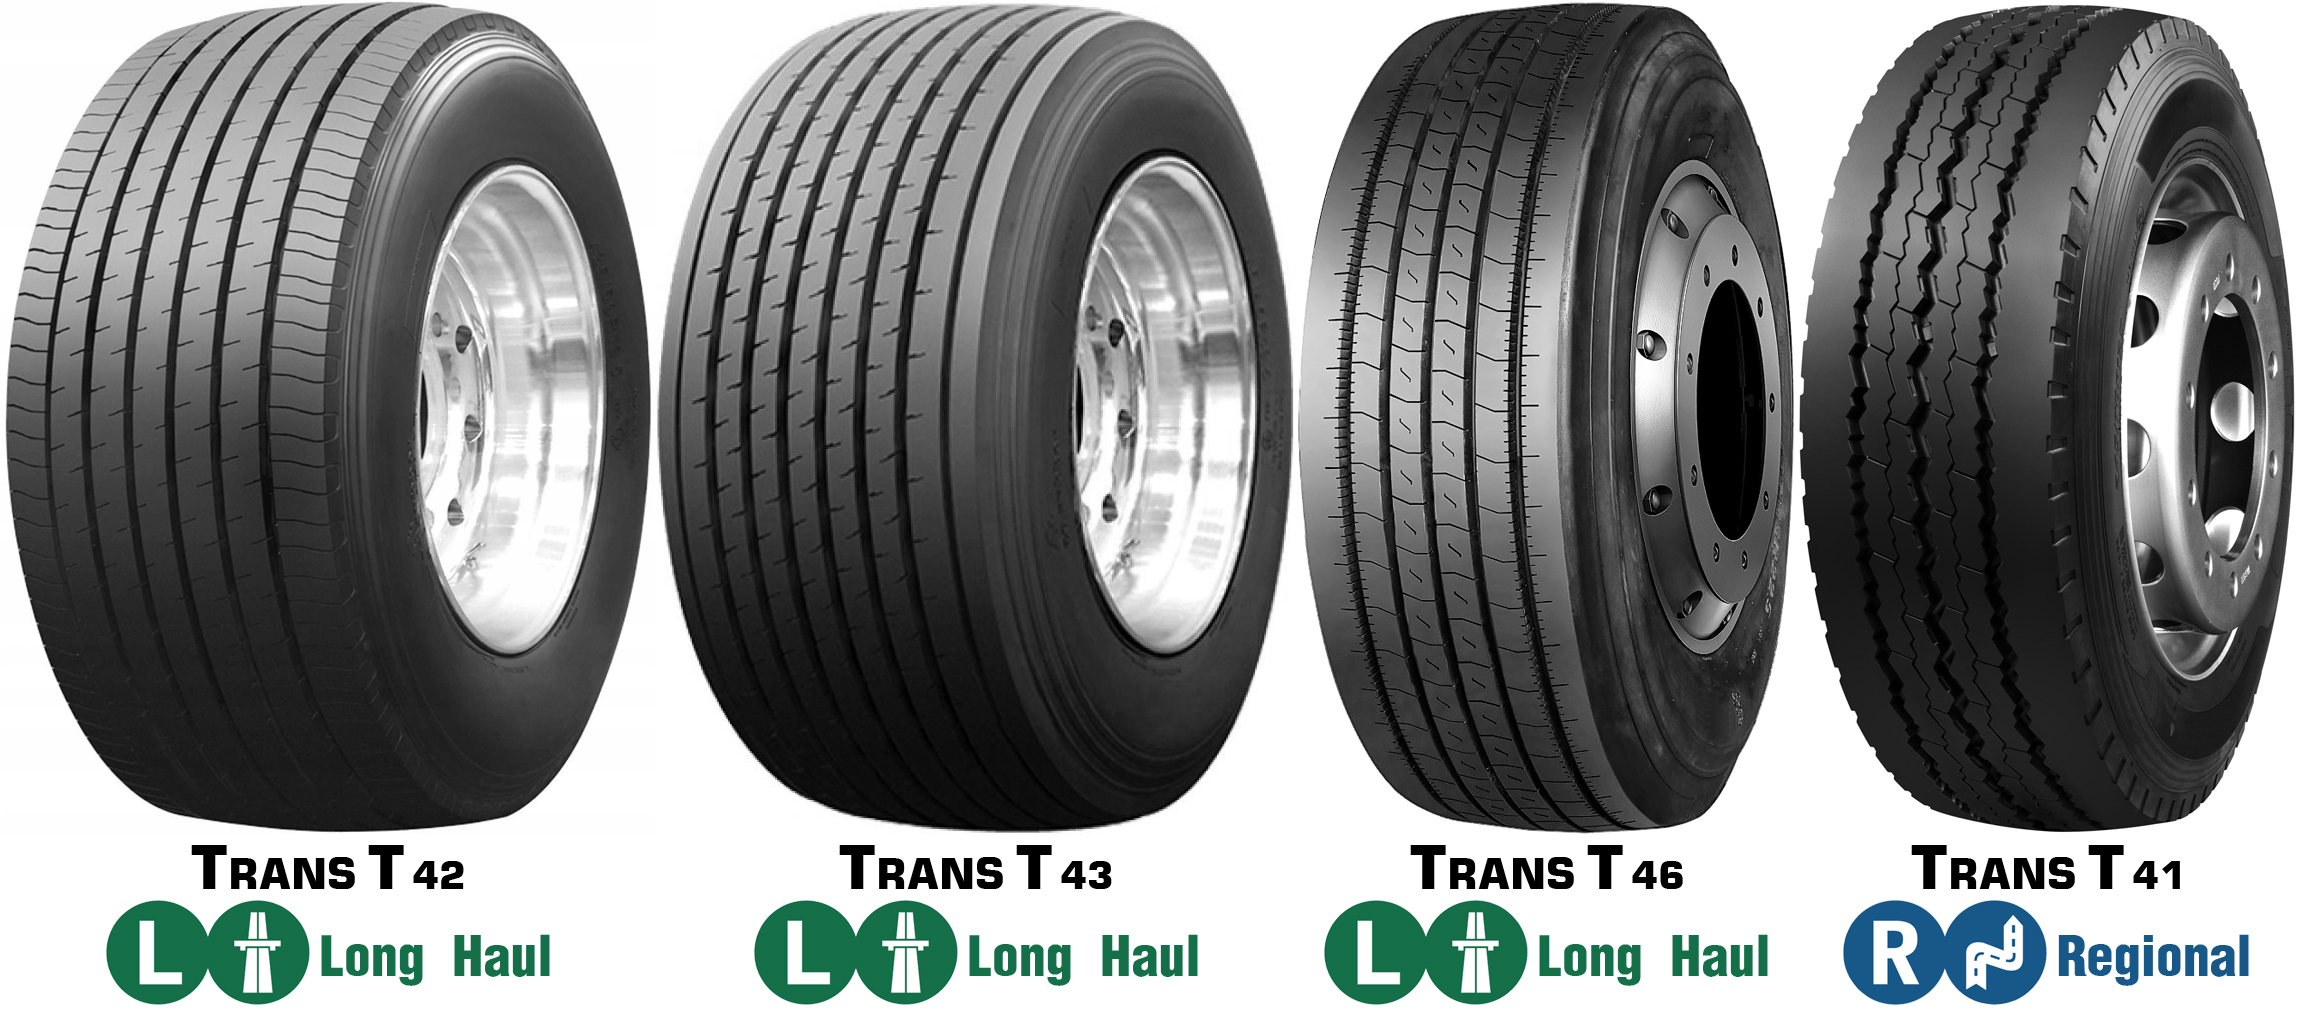 Тежкотоварни гуми TRAZANO TRANS T 16 TL 215/75 R17.5 135J